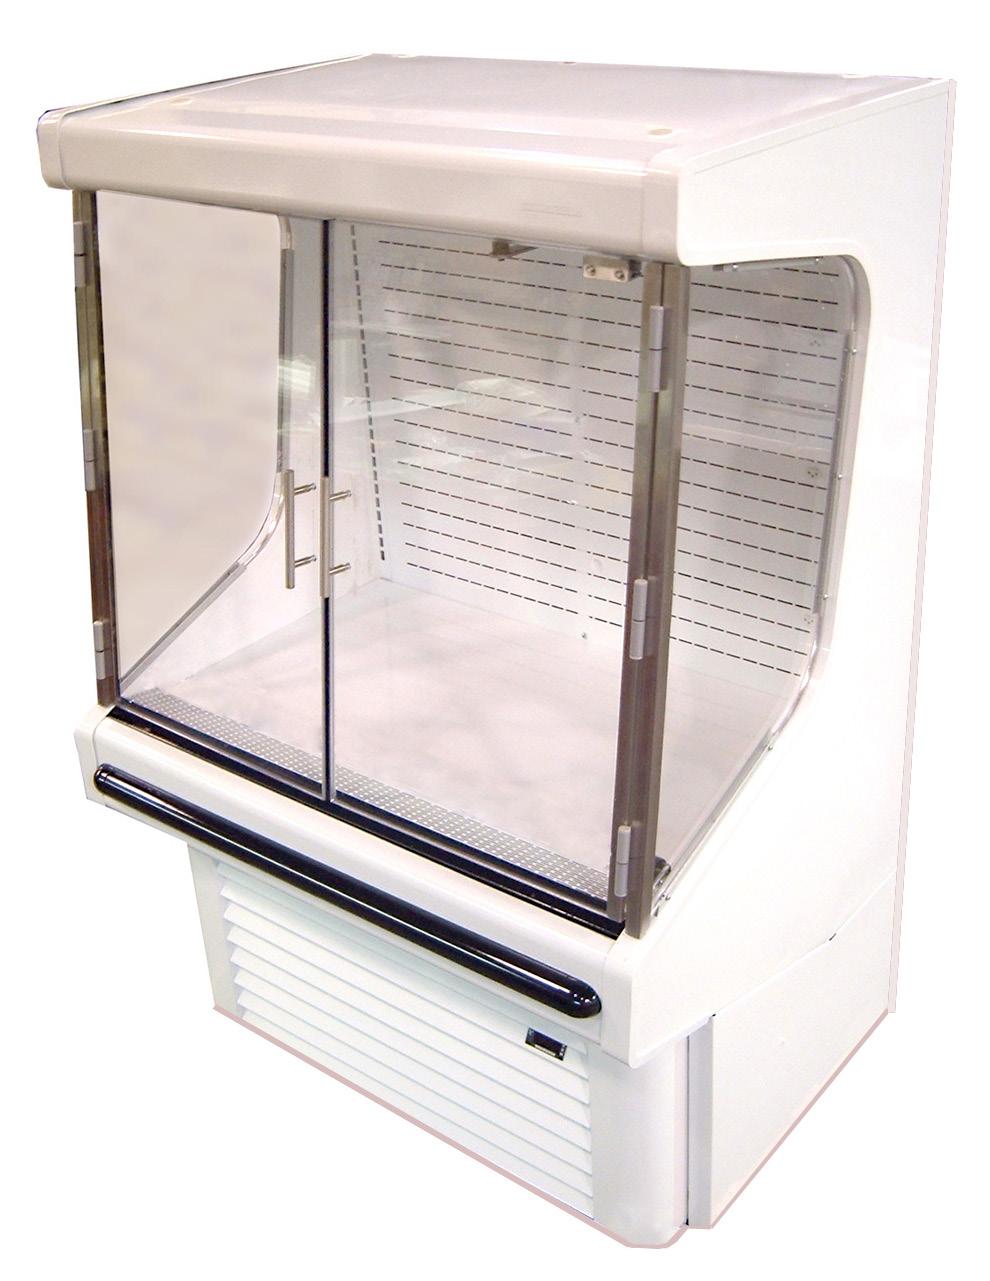 GSVM 4060D Medium Temperature Self Contained Vertical Merchandiser with Doors